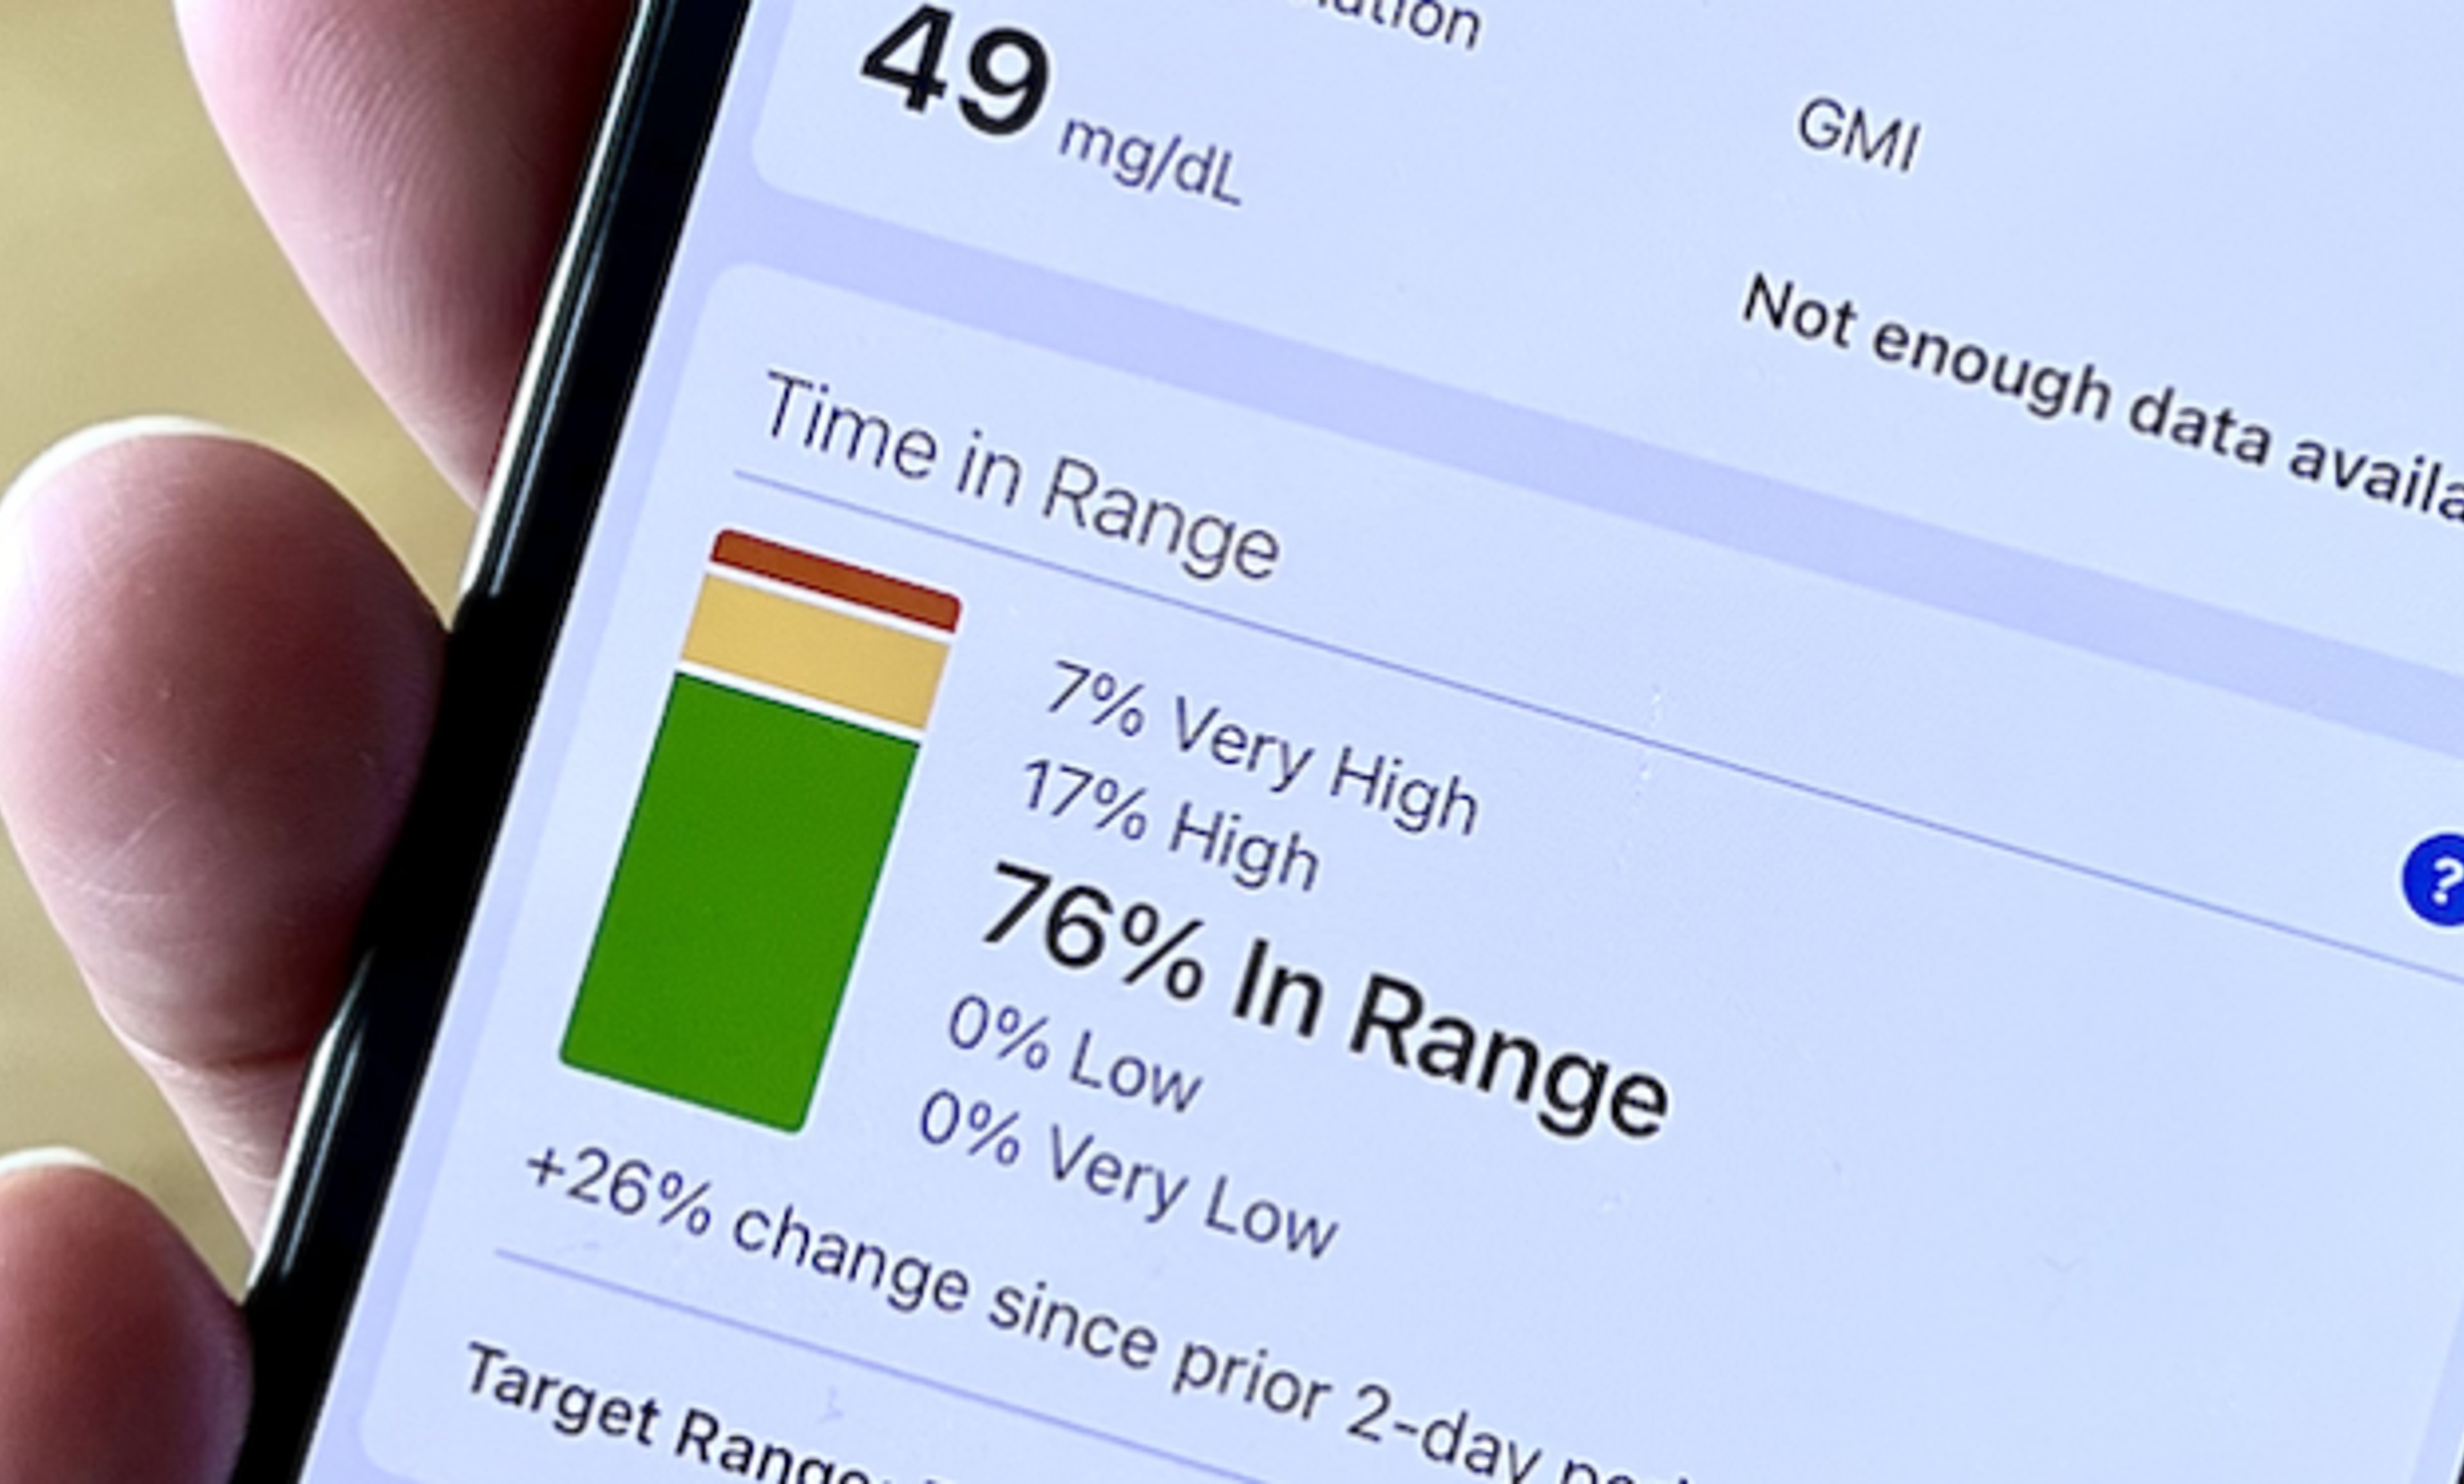 Dexcom Clarity Time in Range percentages